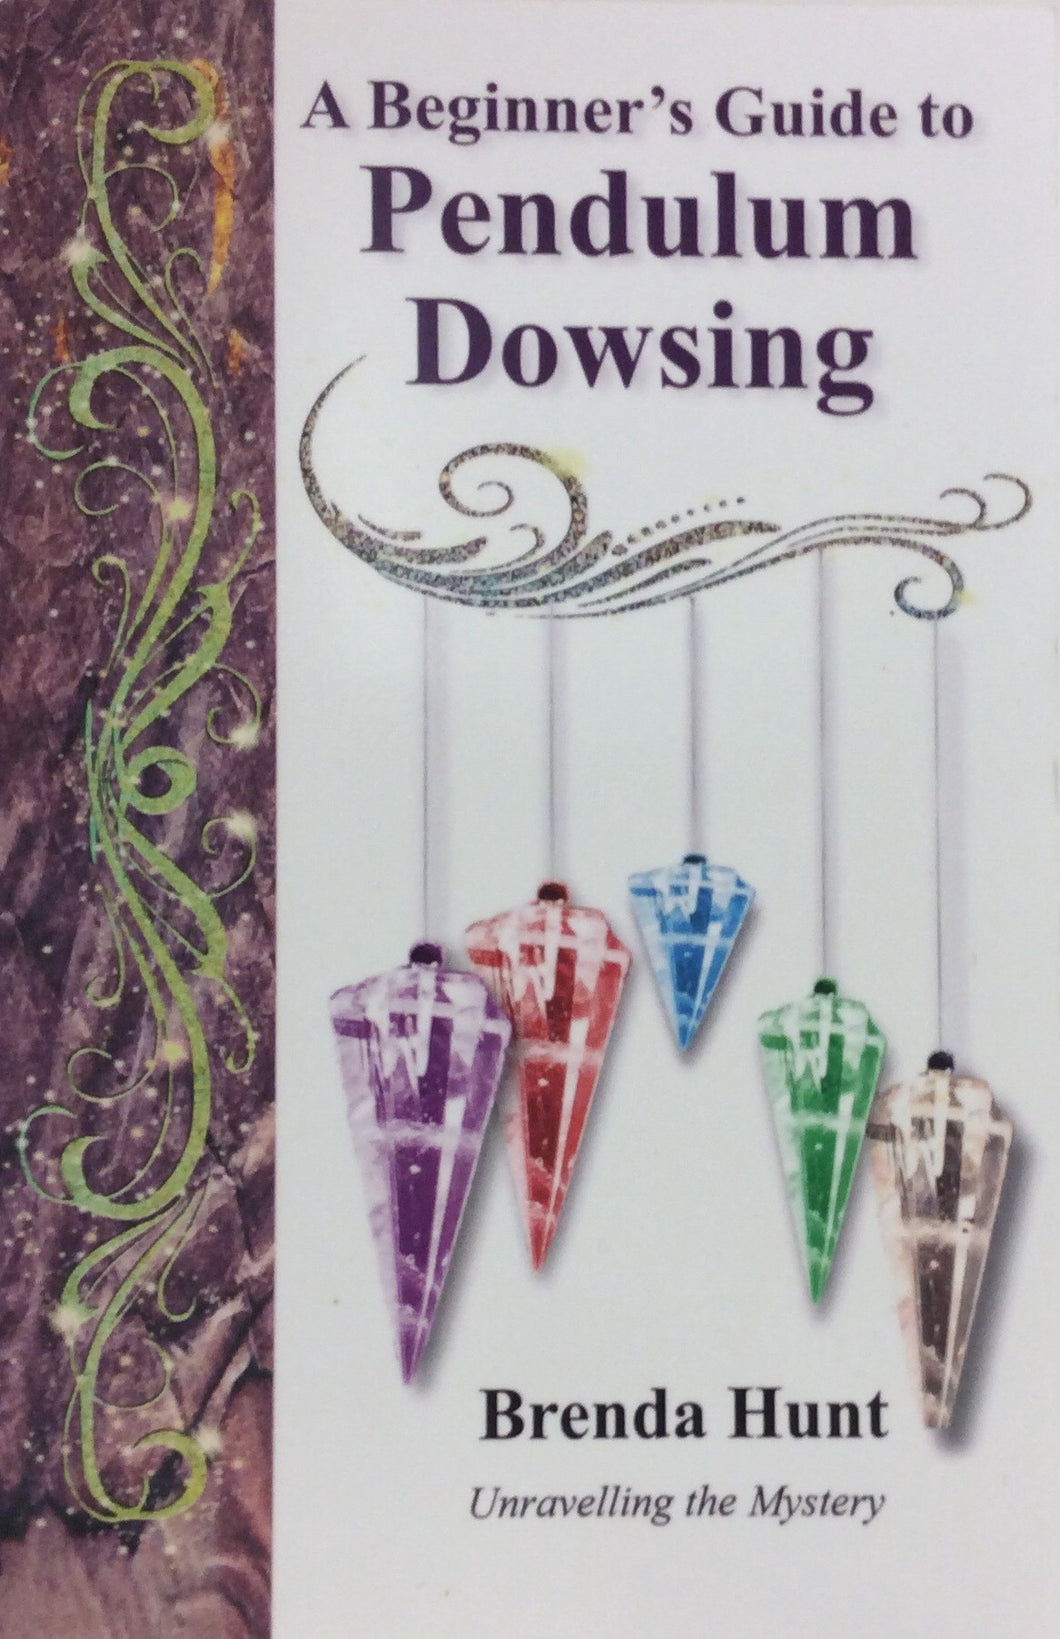 A Beginner’s Guide to Pendulum Dowsing